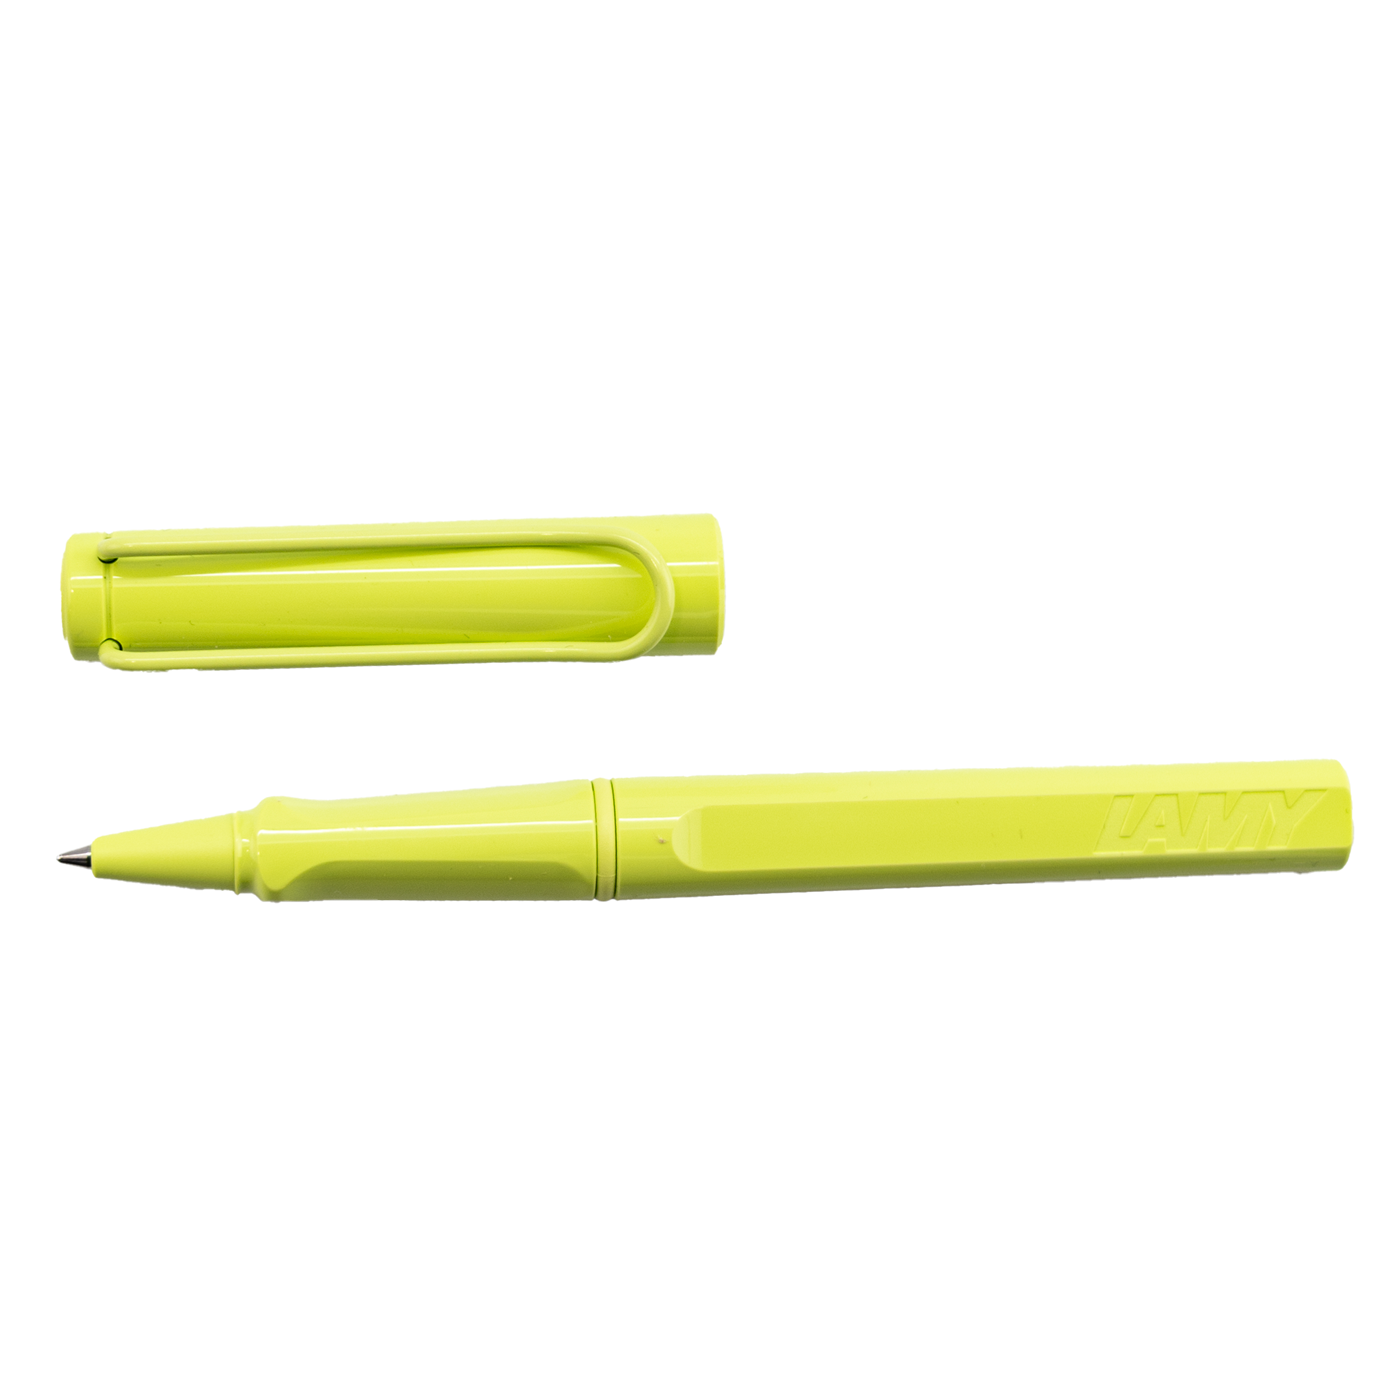 Lamy Safari Special Edition Mechanical Pencils — The Gentleman